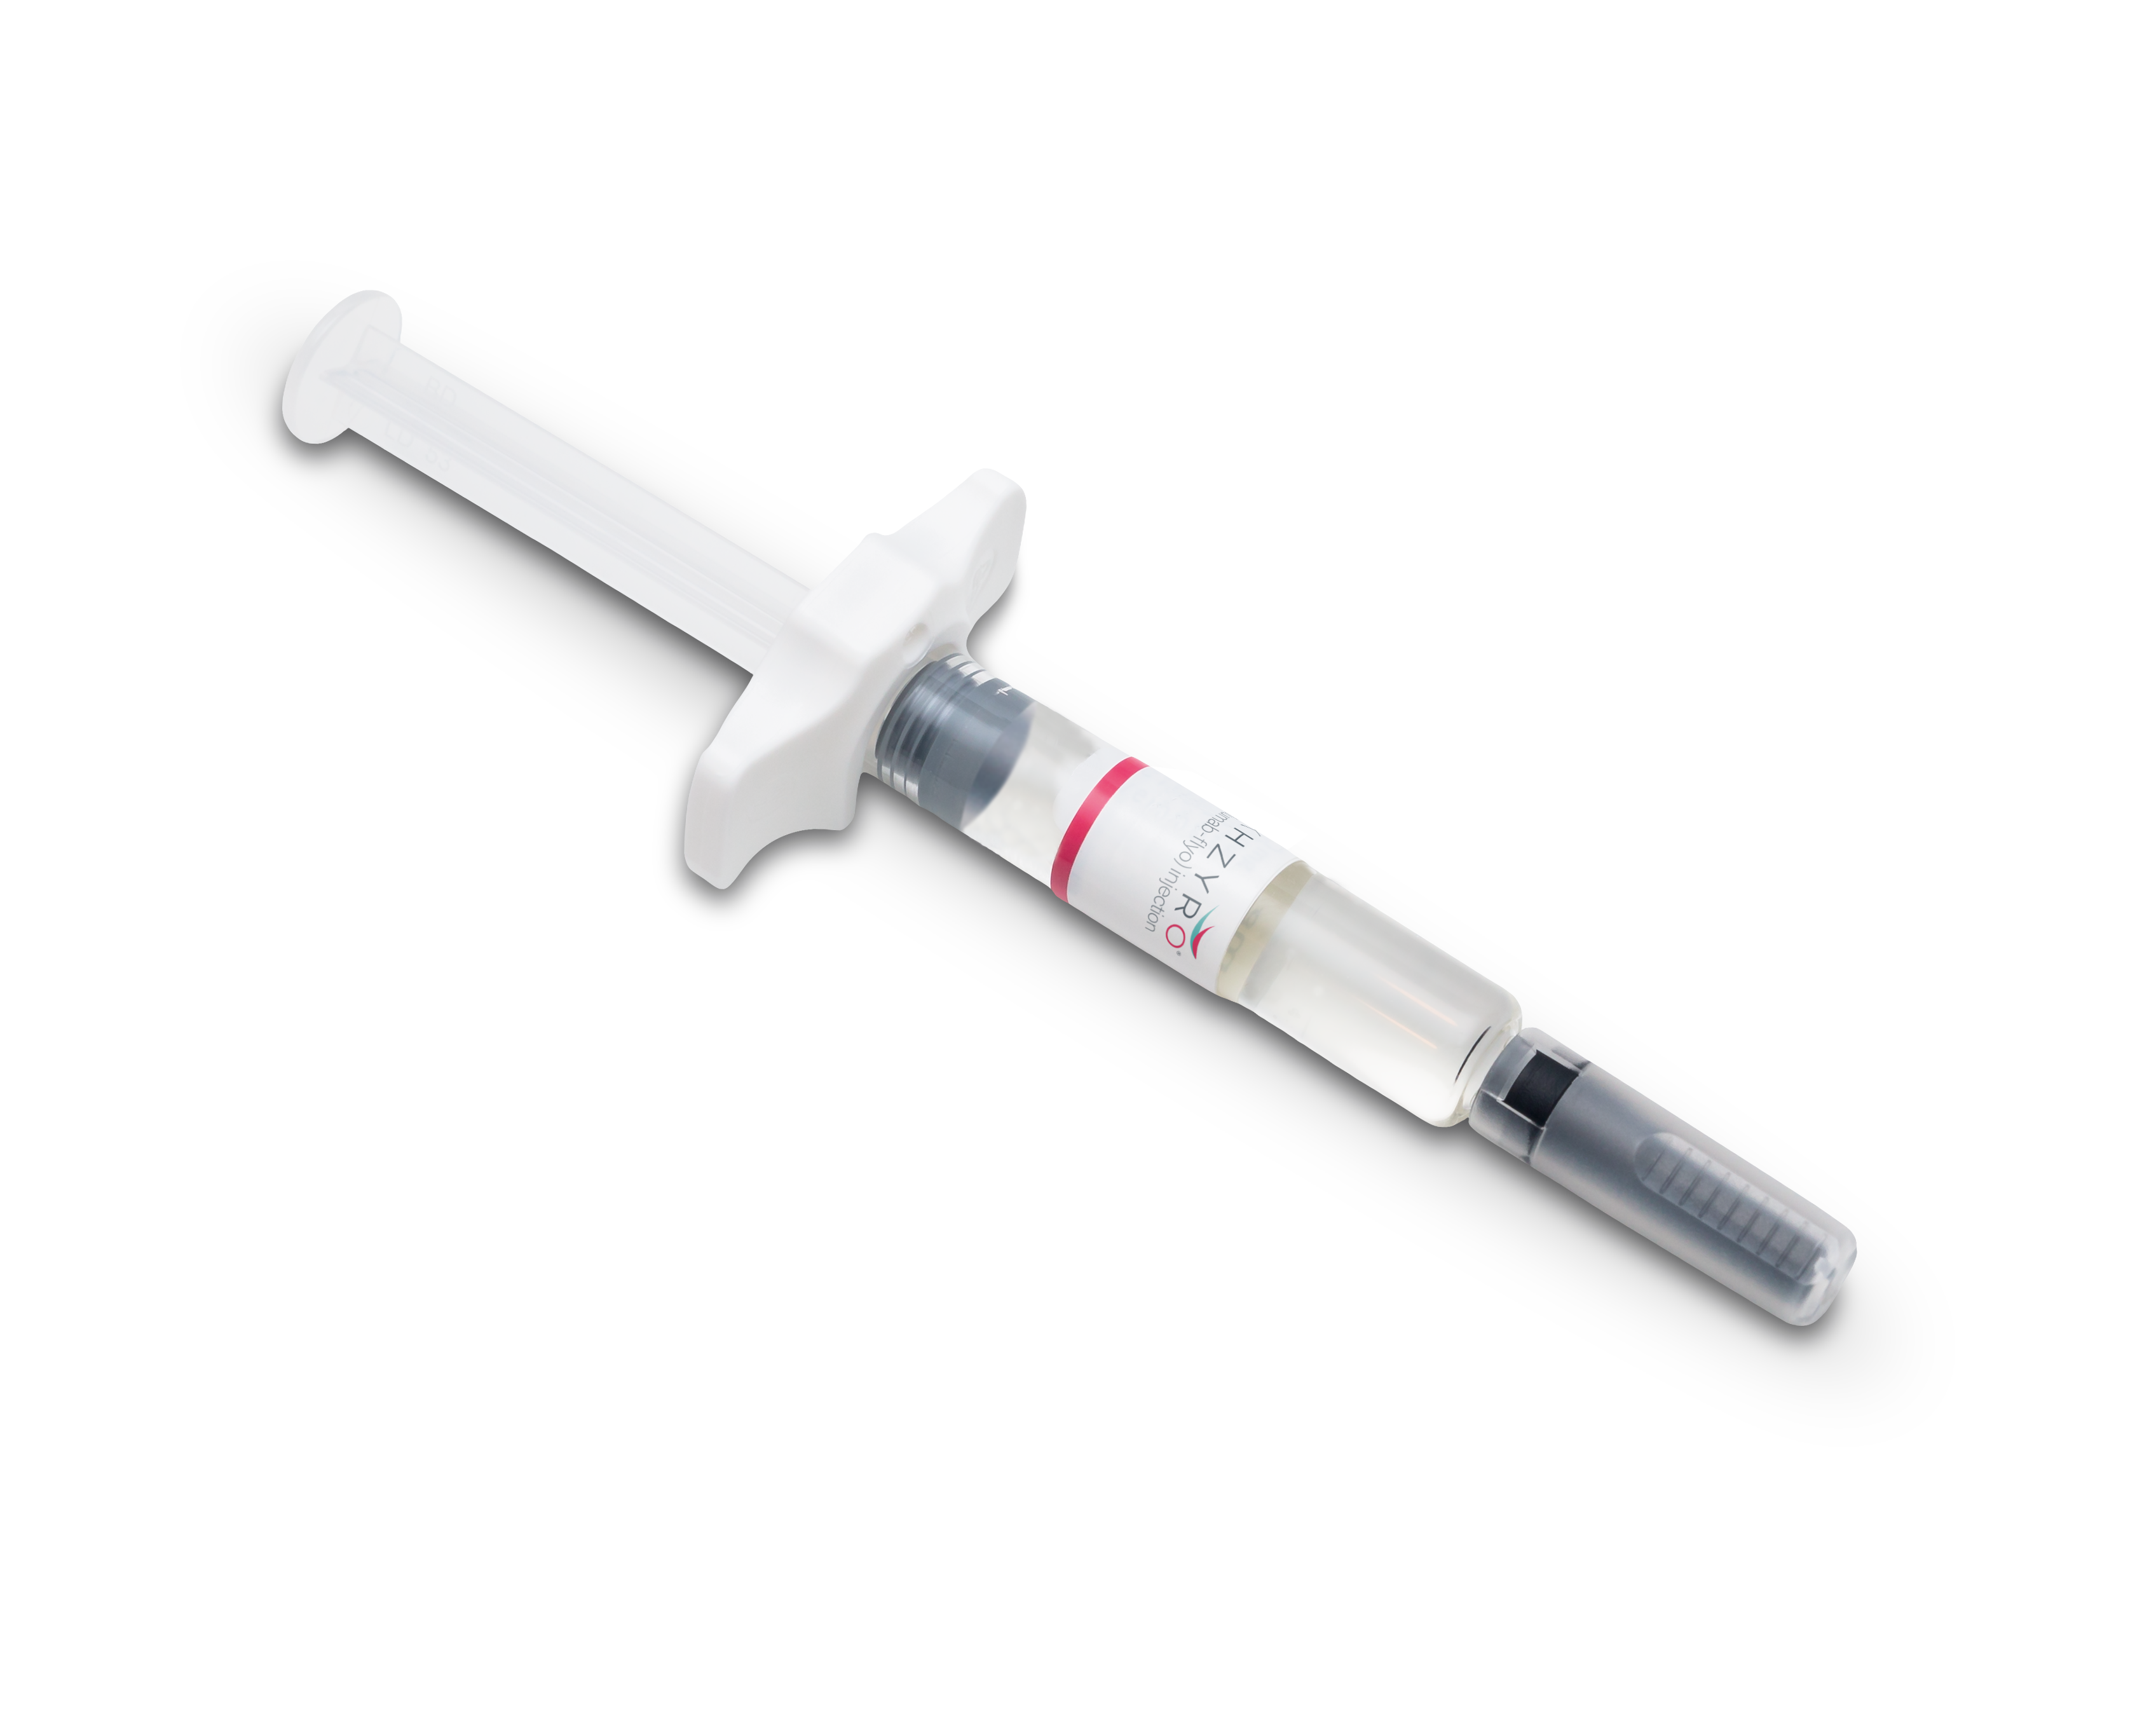 TAKHZYRO (lanadelumab-flyo)150 mg/ml One(1) single-dose prefilled syringe 2 mL (47783646-01) 